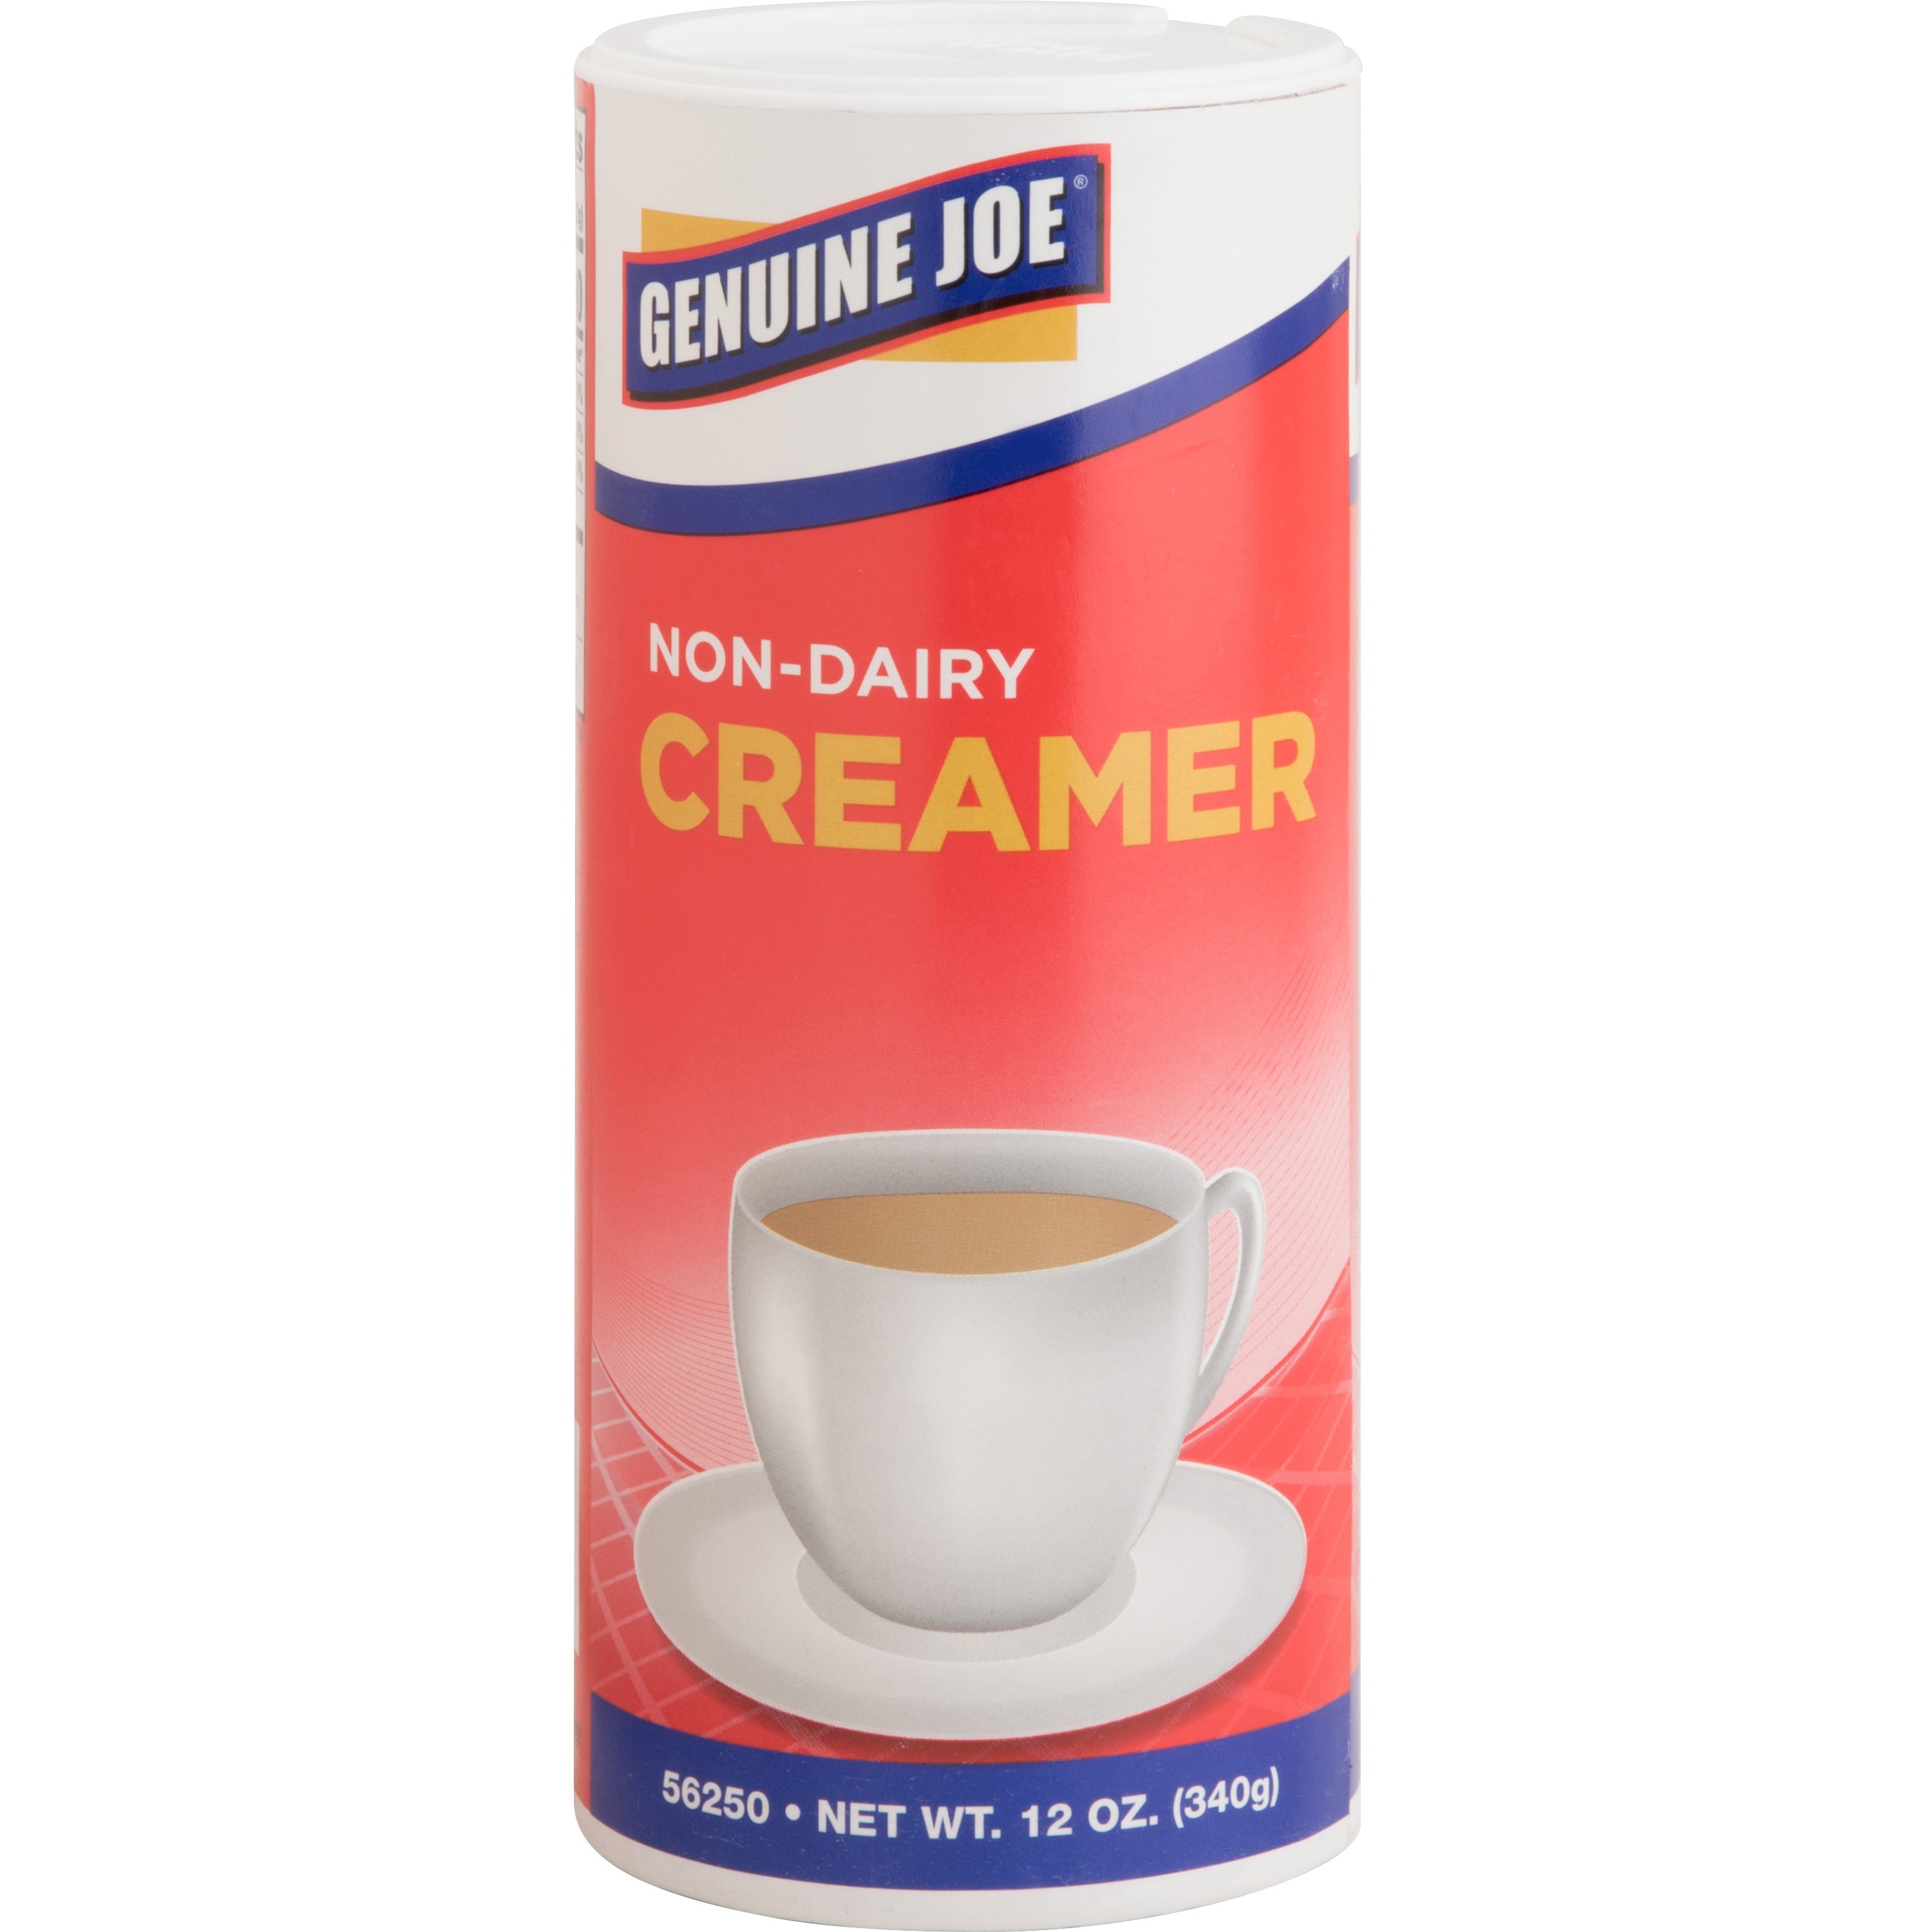 Genuine Joe Nondairy Creamer 
Canister, 12OZ, 3/PK, 8PK/CT